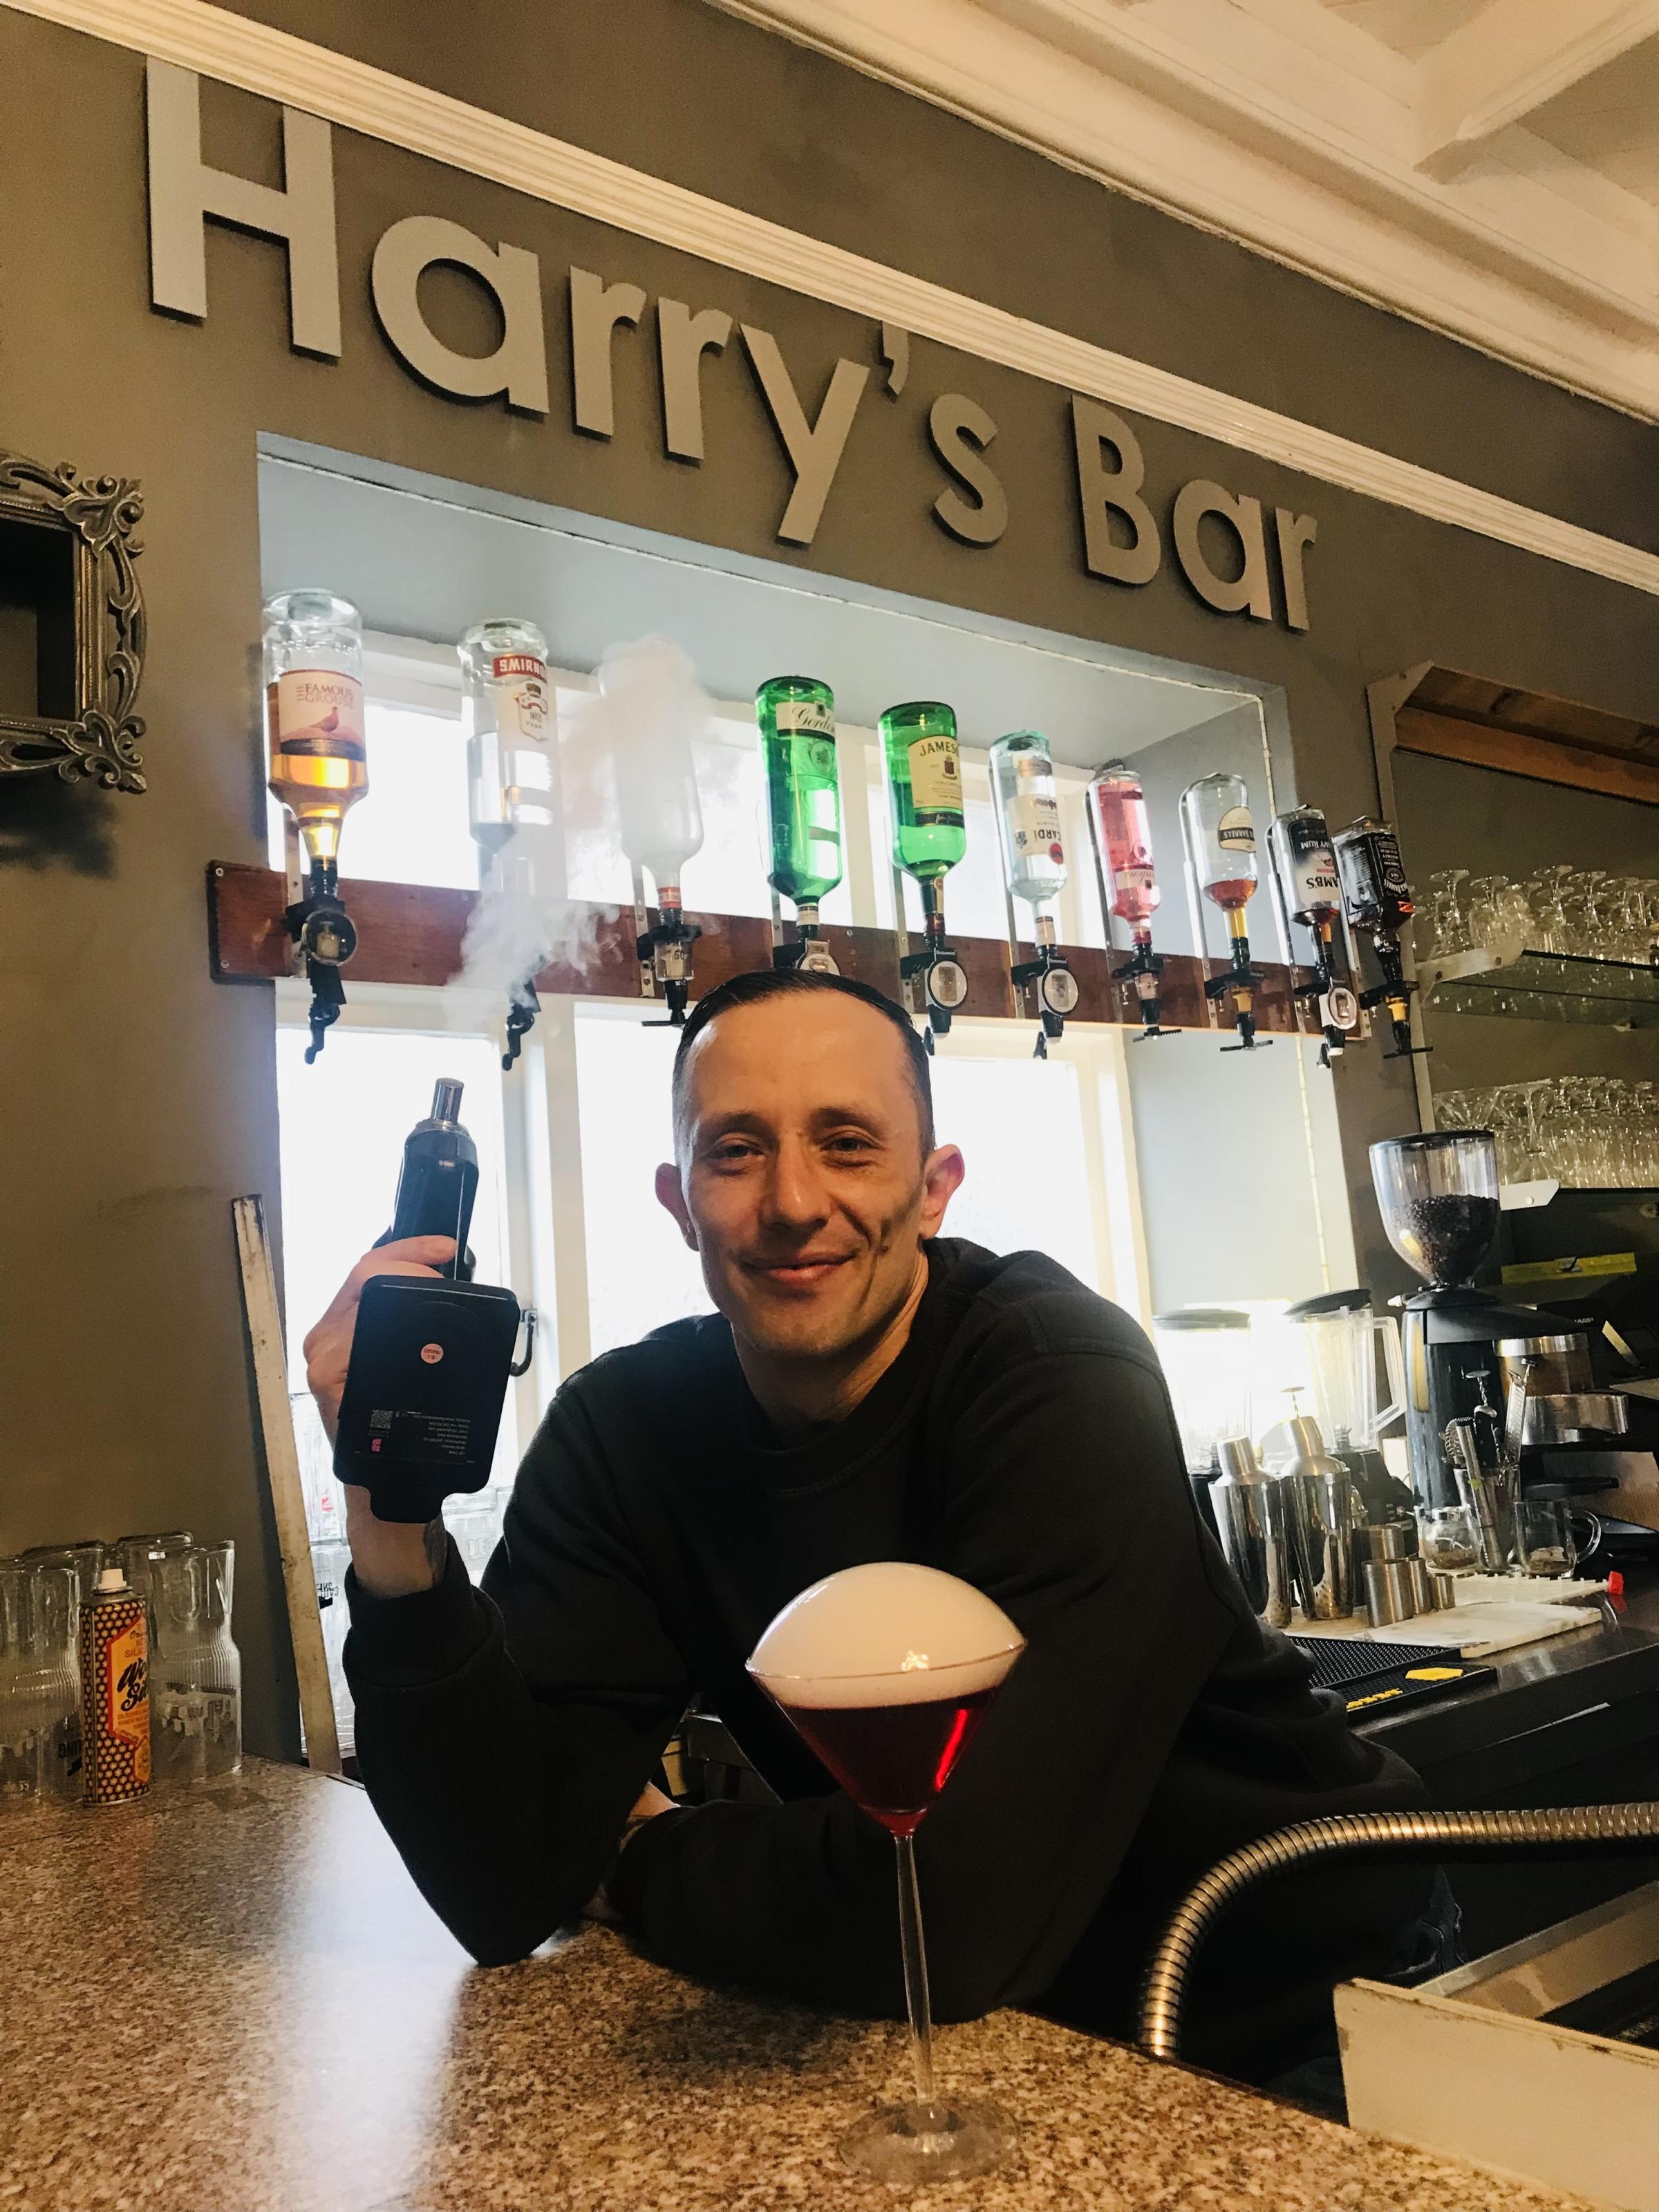 The inspiration for Harrys Bar, barman Harry Woodford